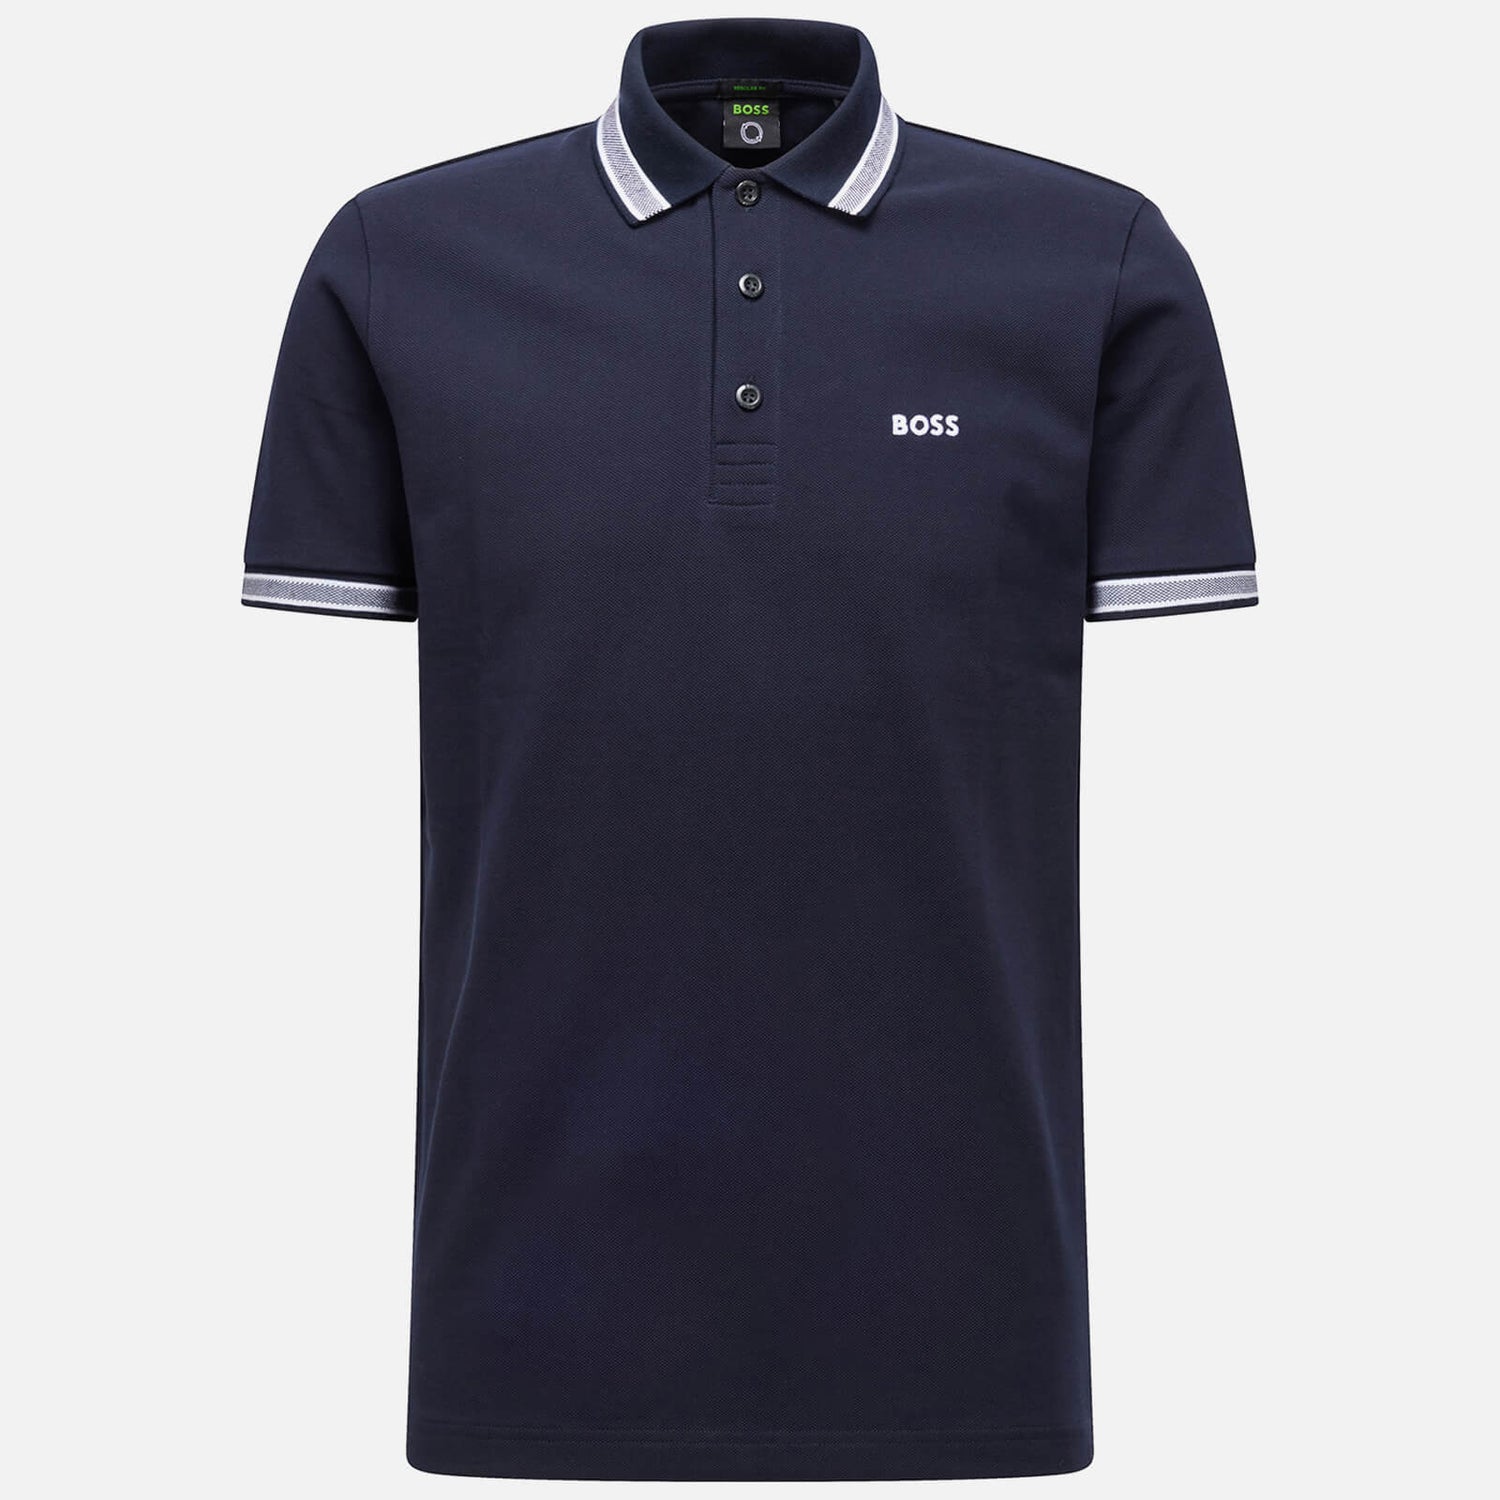 BOSS Athleisure Men's Paddy Polo Shirt - Dark Blue - S